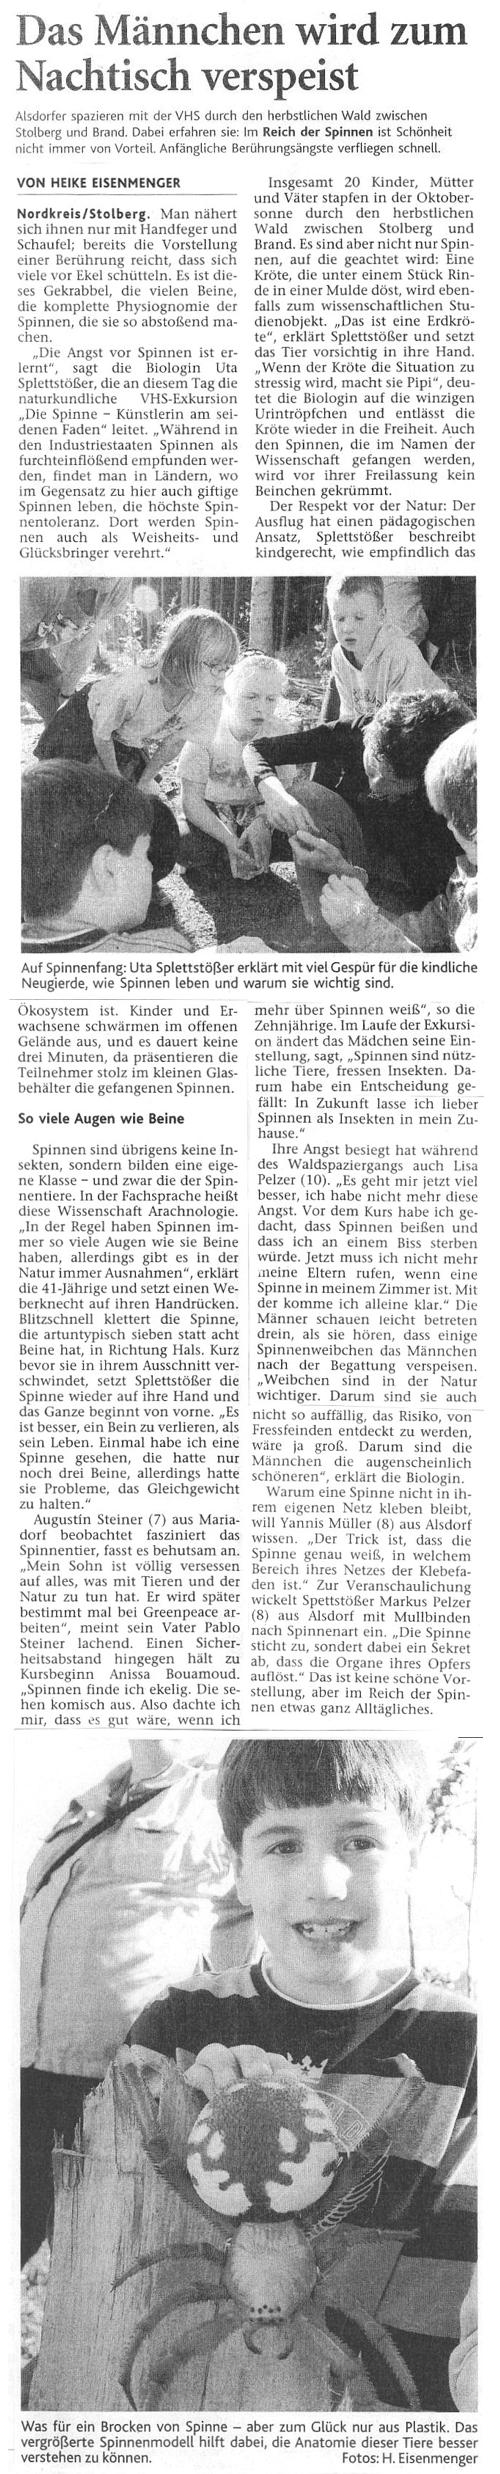 Aachener Zeitung, 26.10.2008